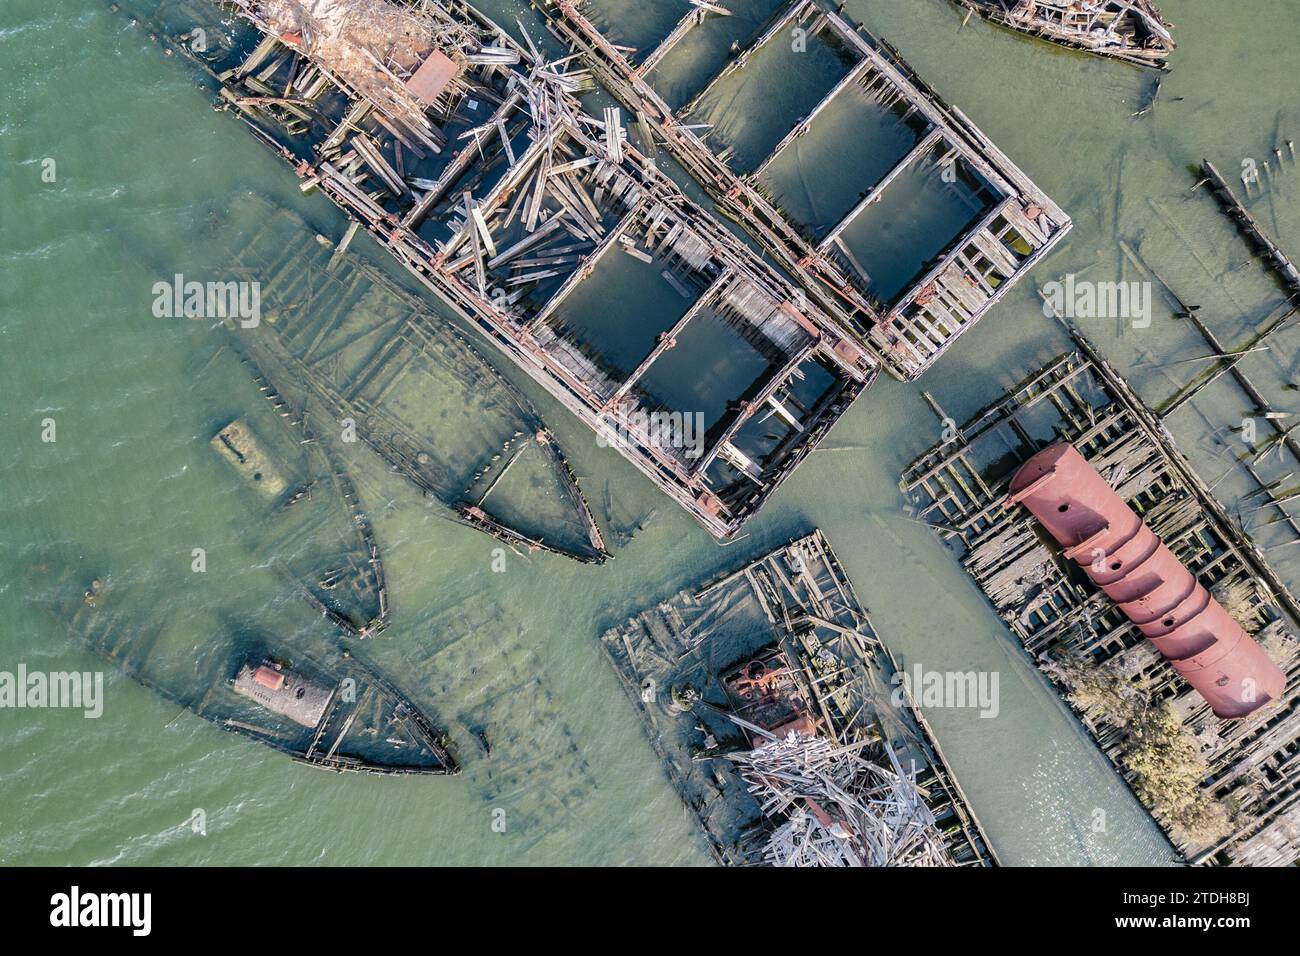 Abandoned ships from tugboat graveyard, Arthur Kill Staten Island, New York Stock Photo